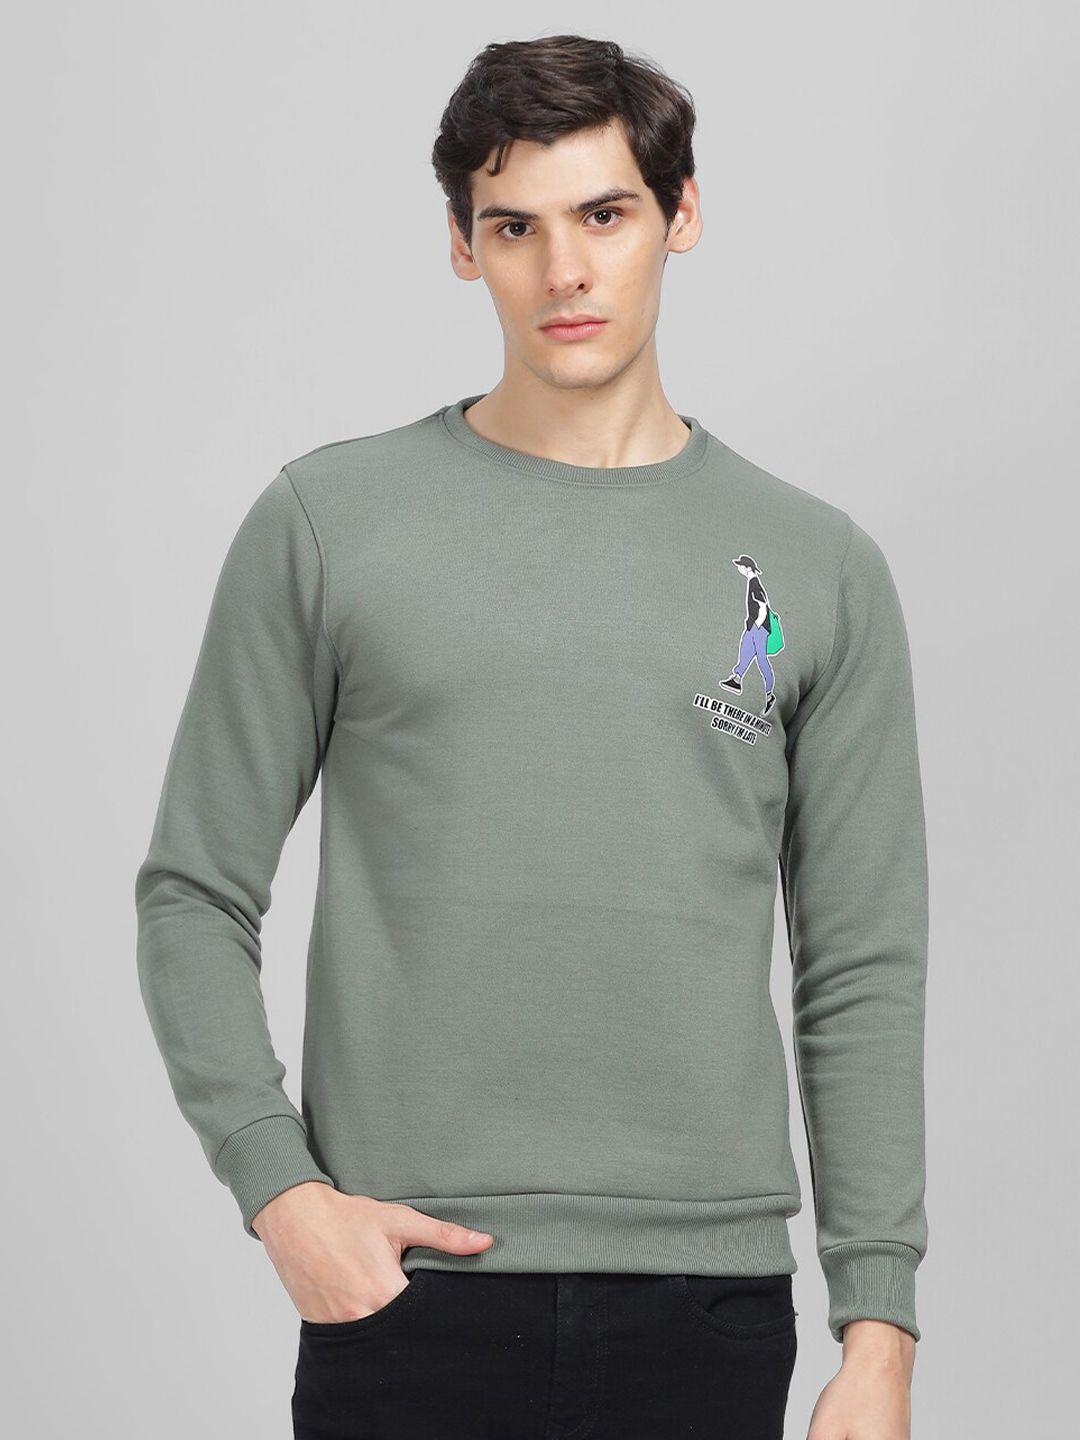 parcel yard graphic printed round neck pullover sweatshirt